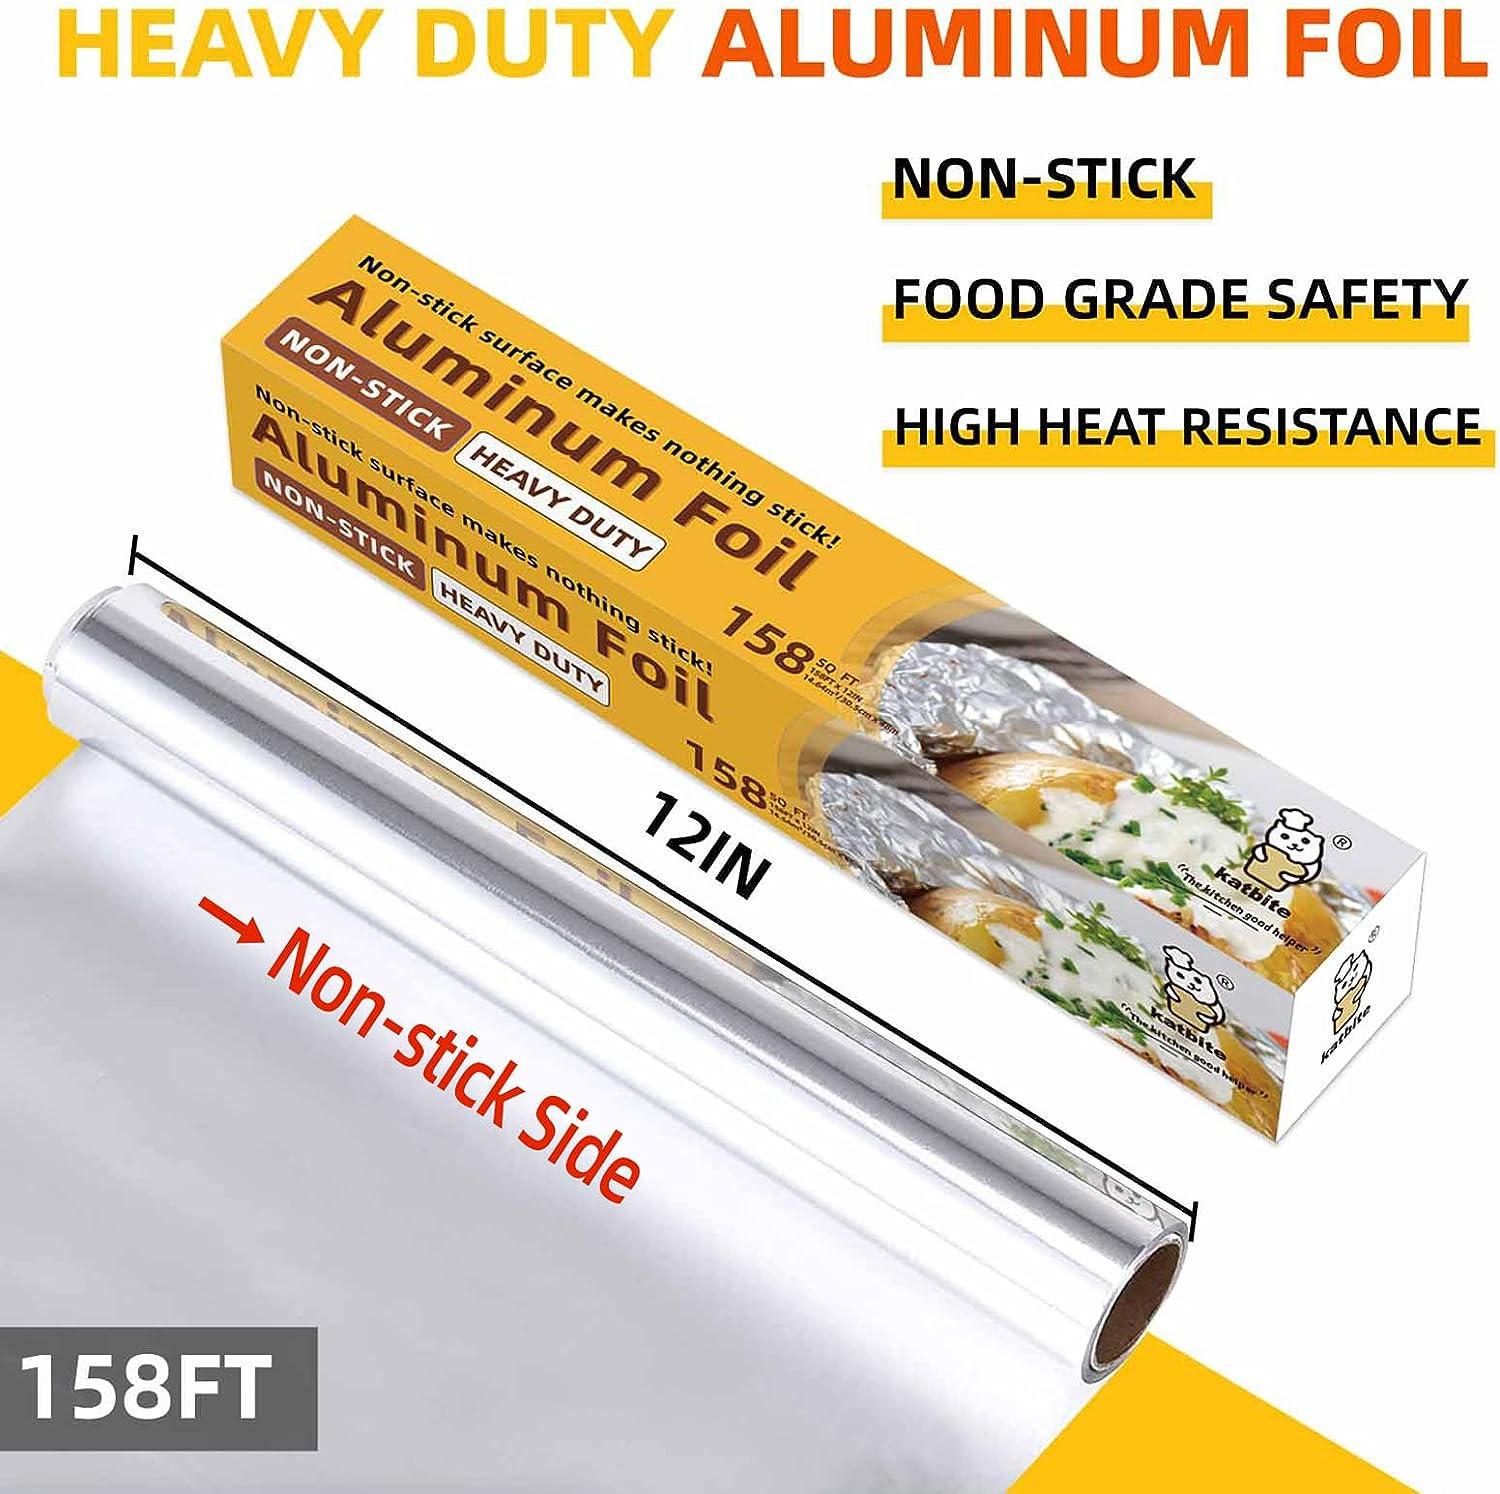 Katbite Non Stick Aluminum Foil Roll, 12 Inch 158 Sq.Ft Grilling